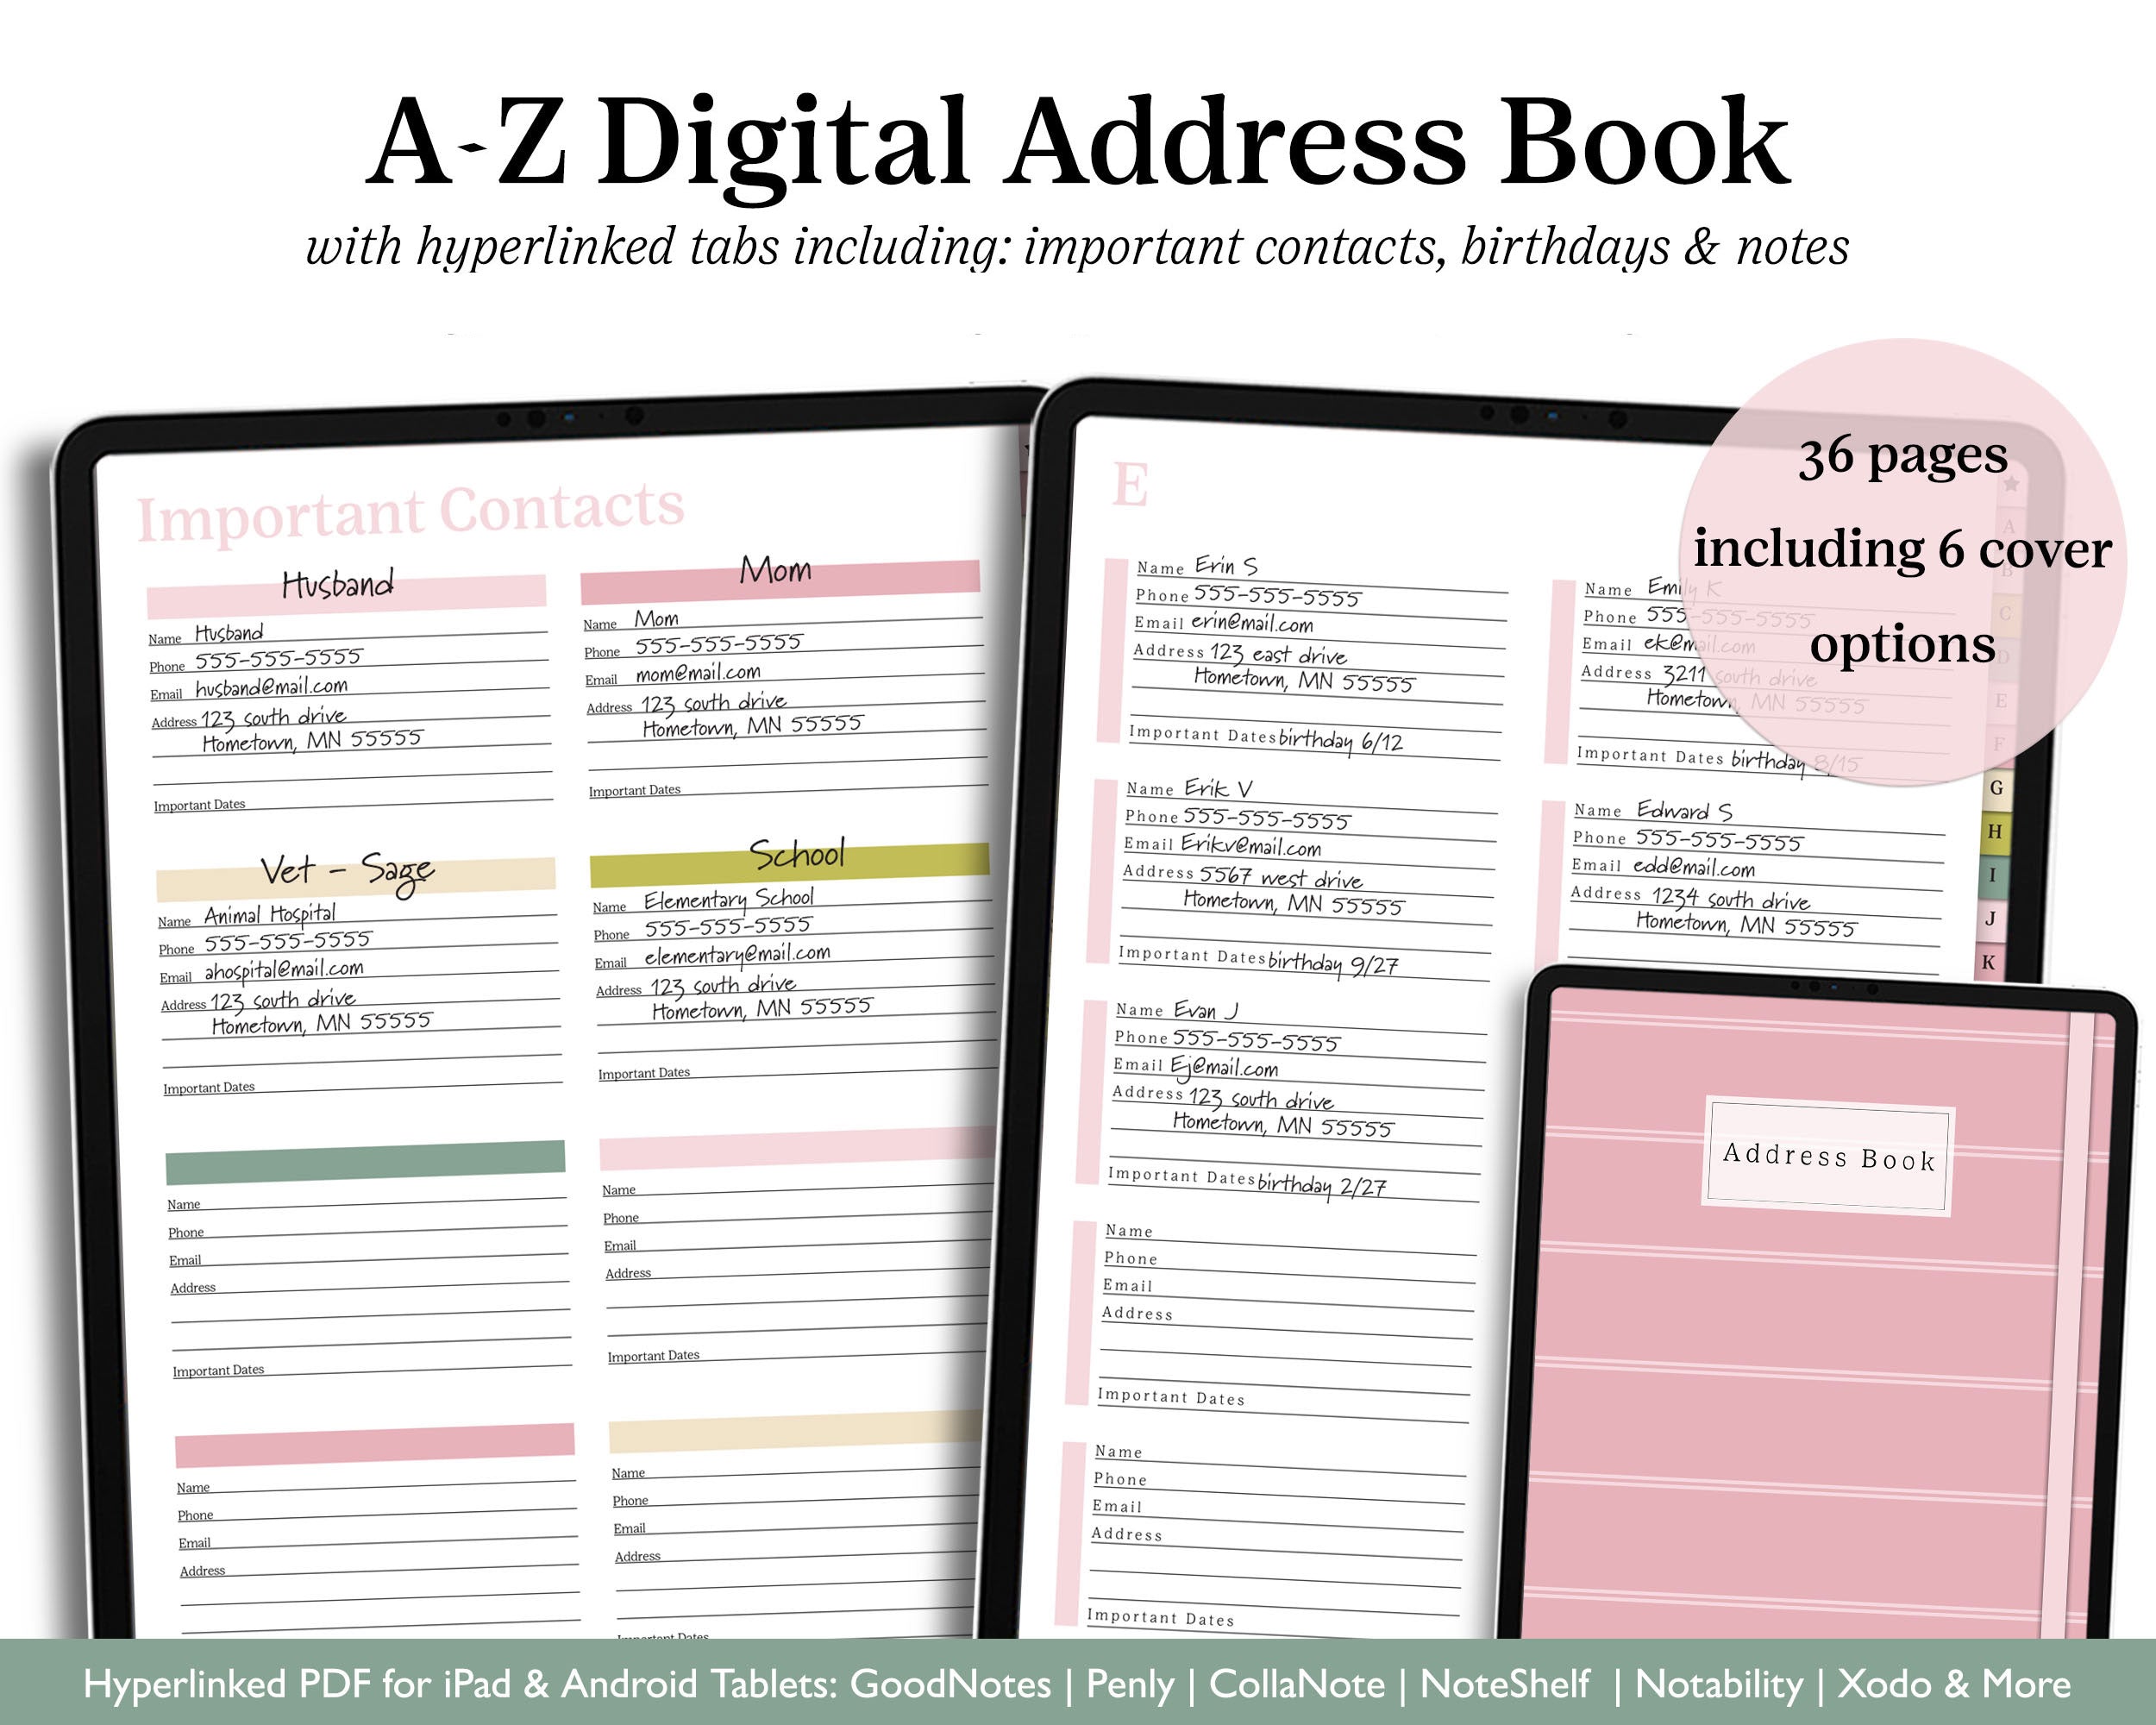 Printable Phone List Template  Address book template, Book